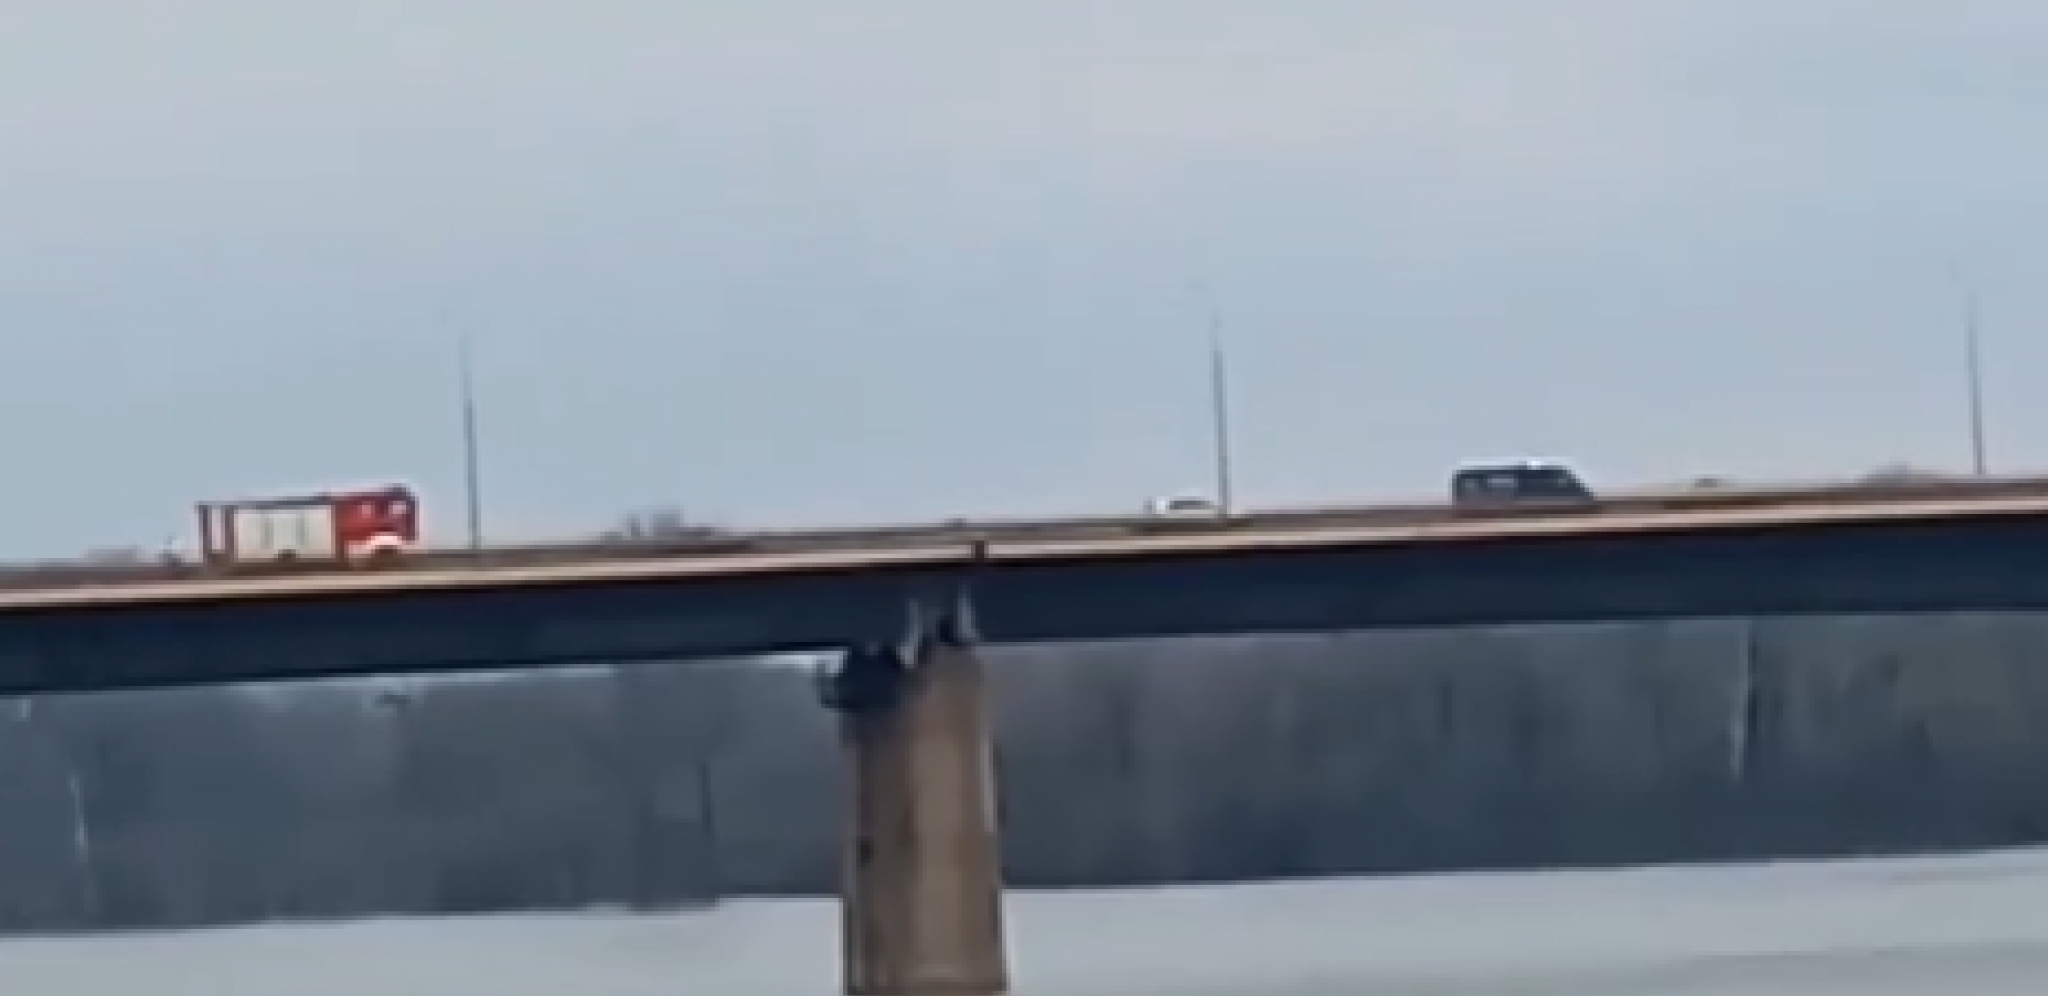 UŽAS NA MOSTU SMEDEREVO-KOVIN Muškarac skočio u reku, policija i vatrogasci na licu mesta (FOTO/VIDEO)